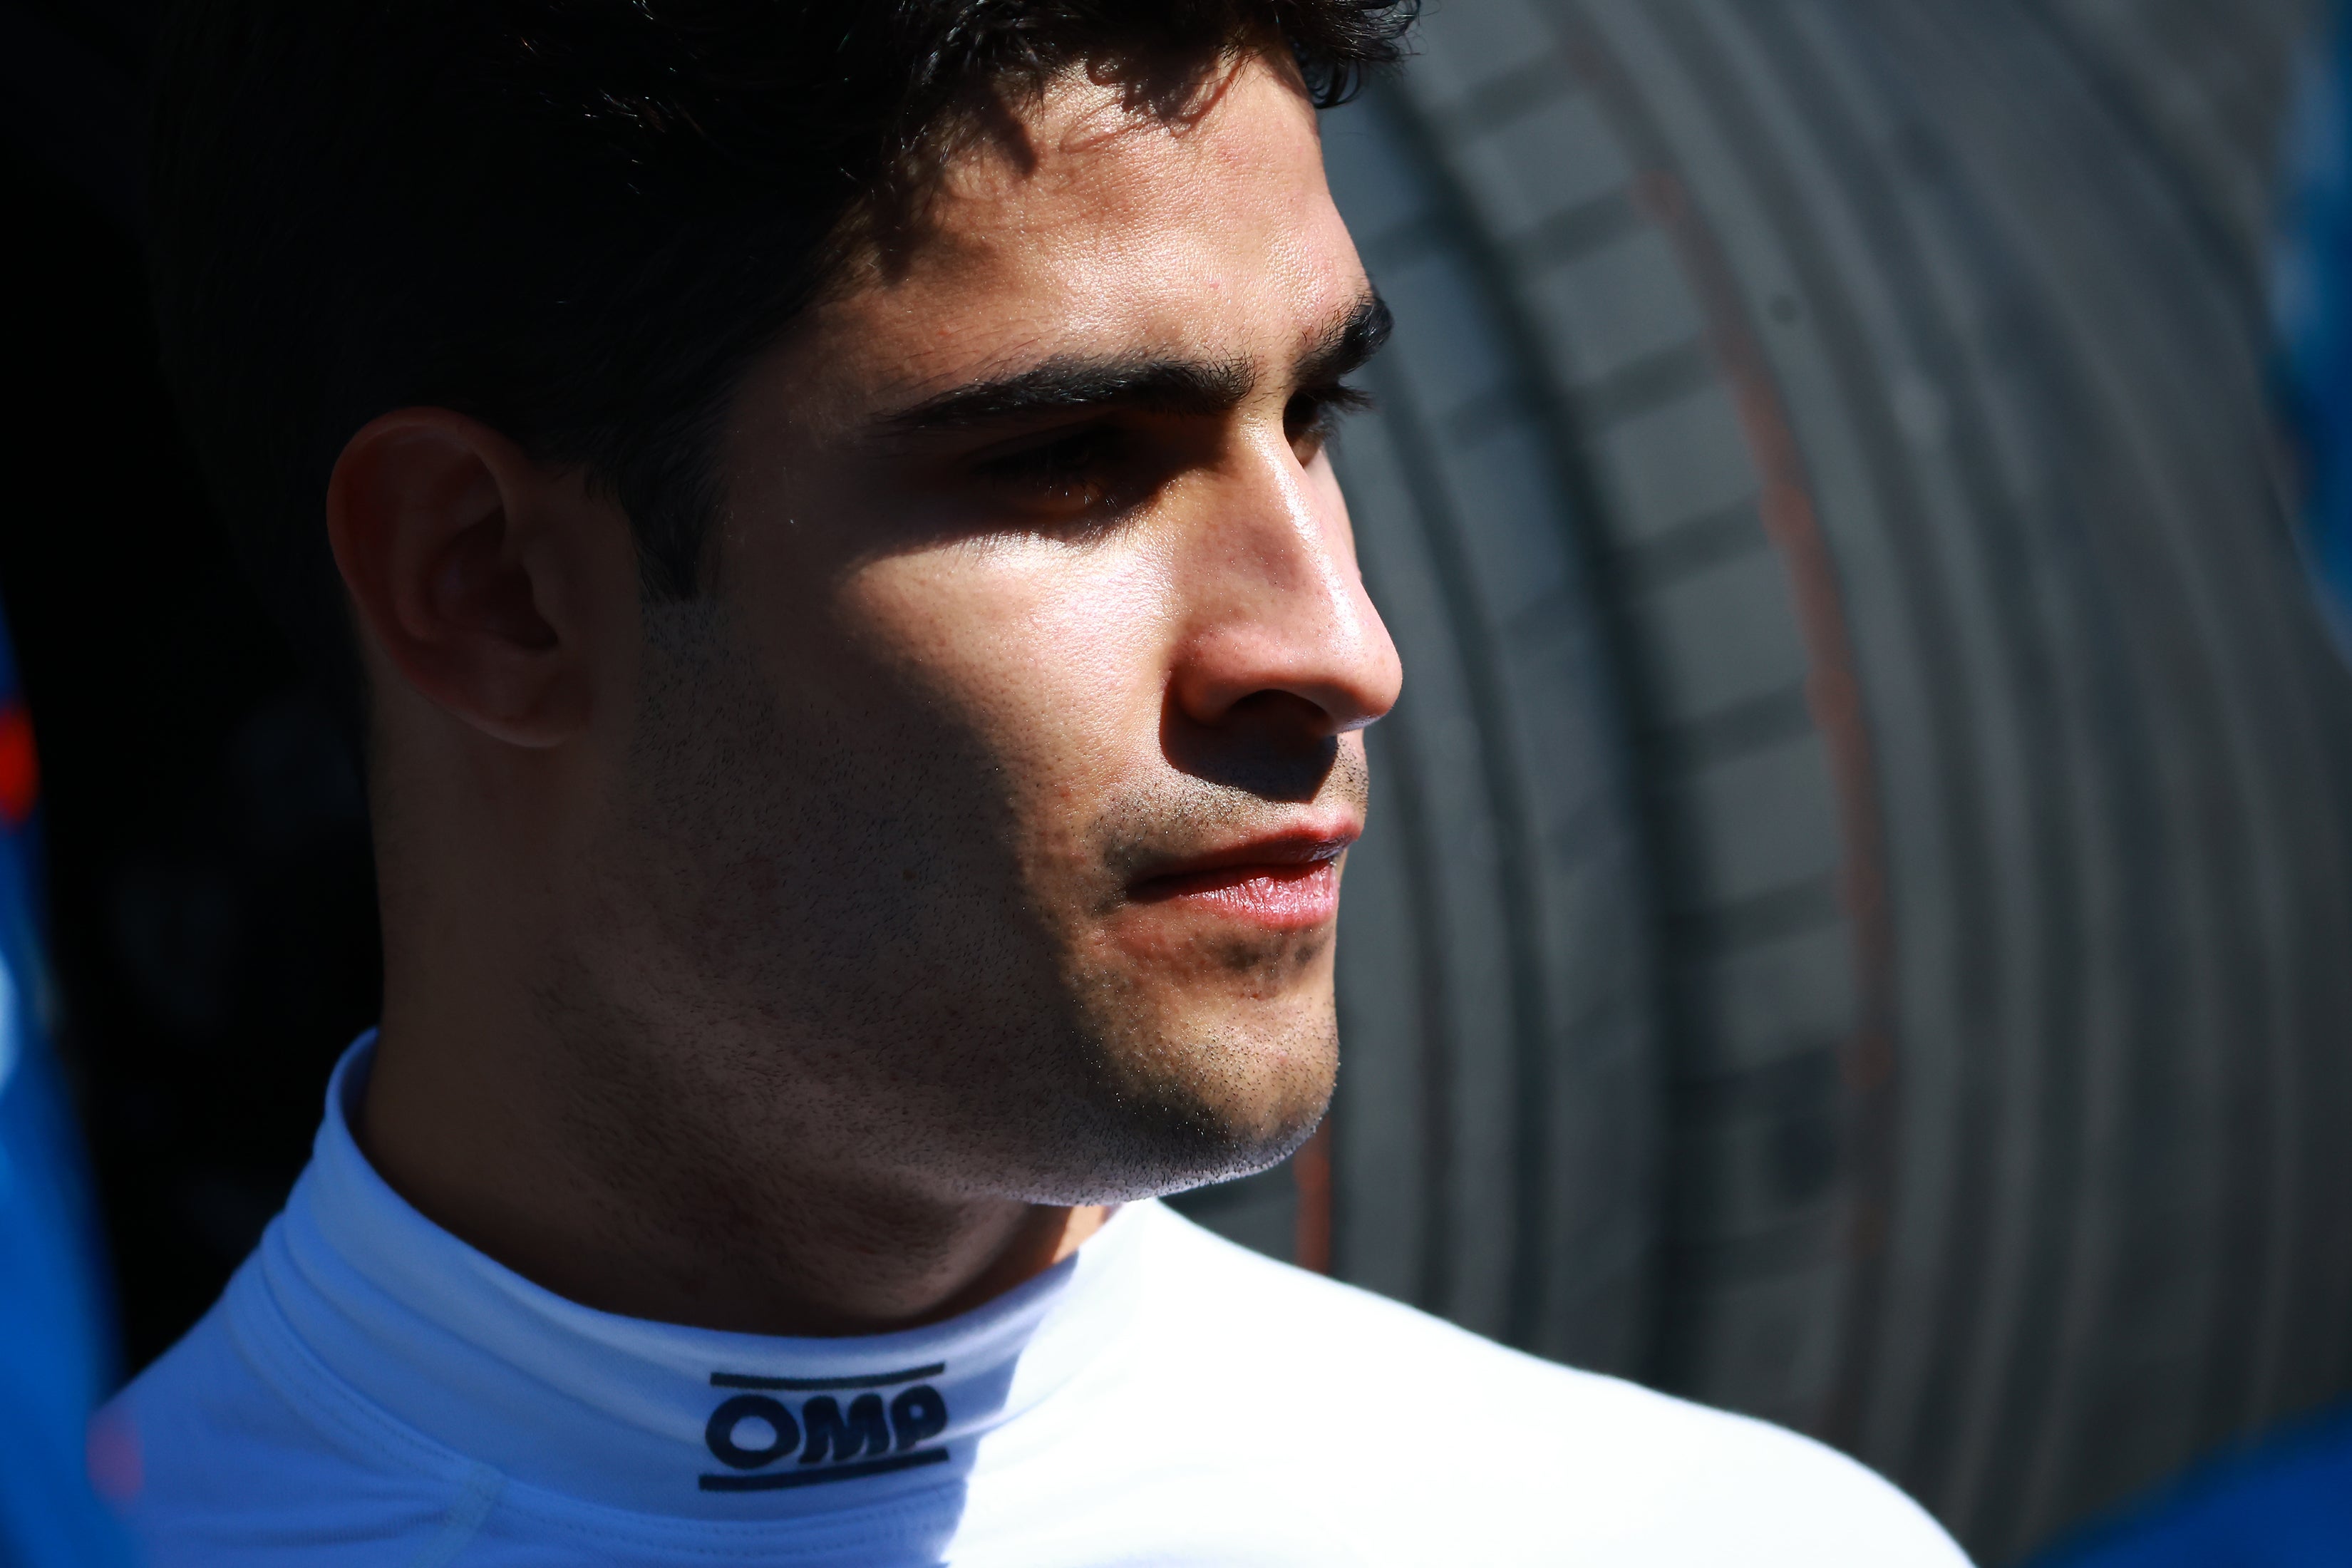 Sergio Sette Camara is one of two Brazilian drivers racing in Formula E this season